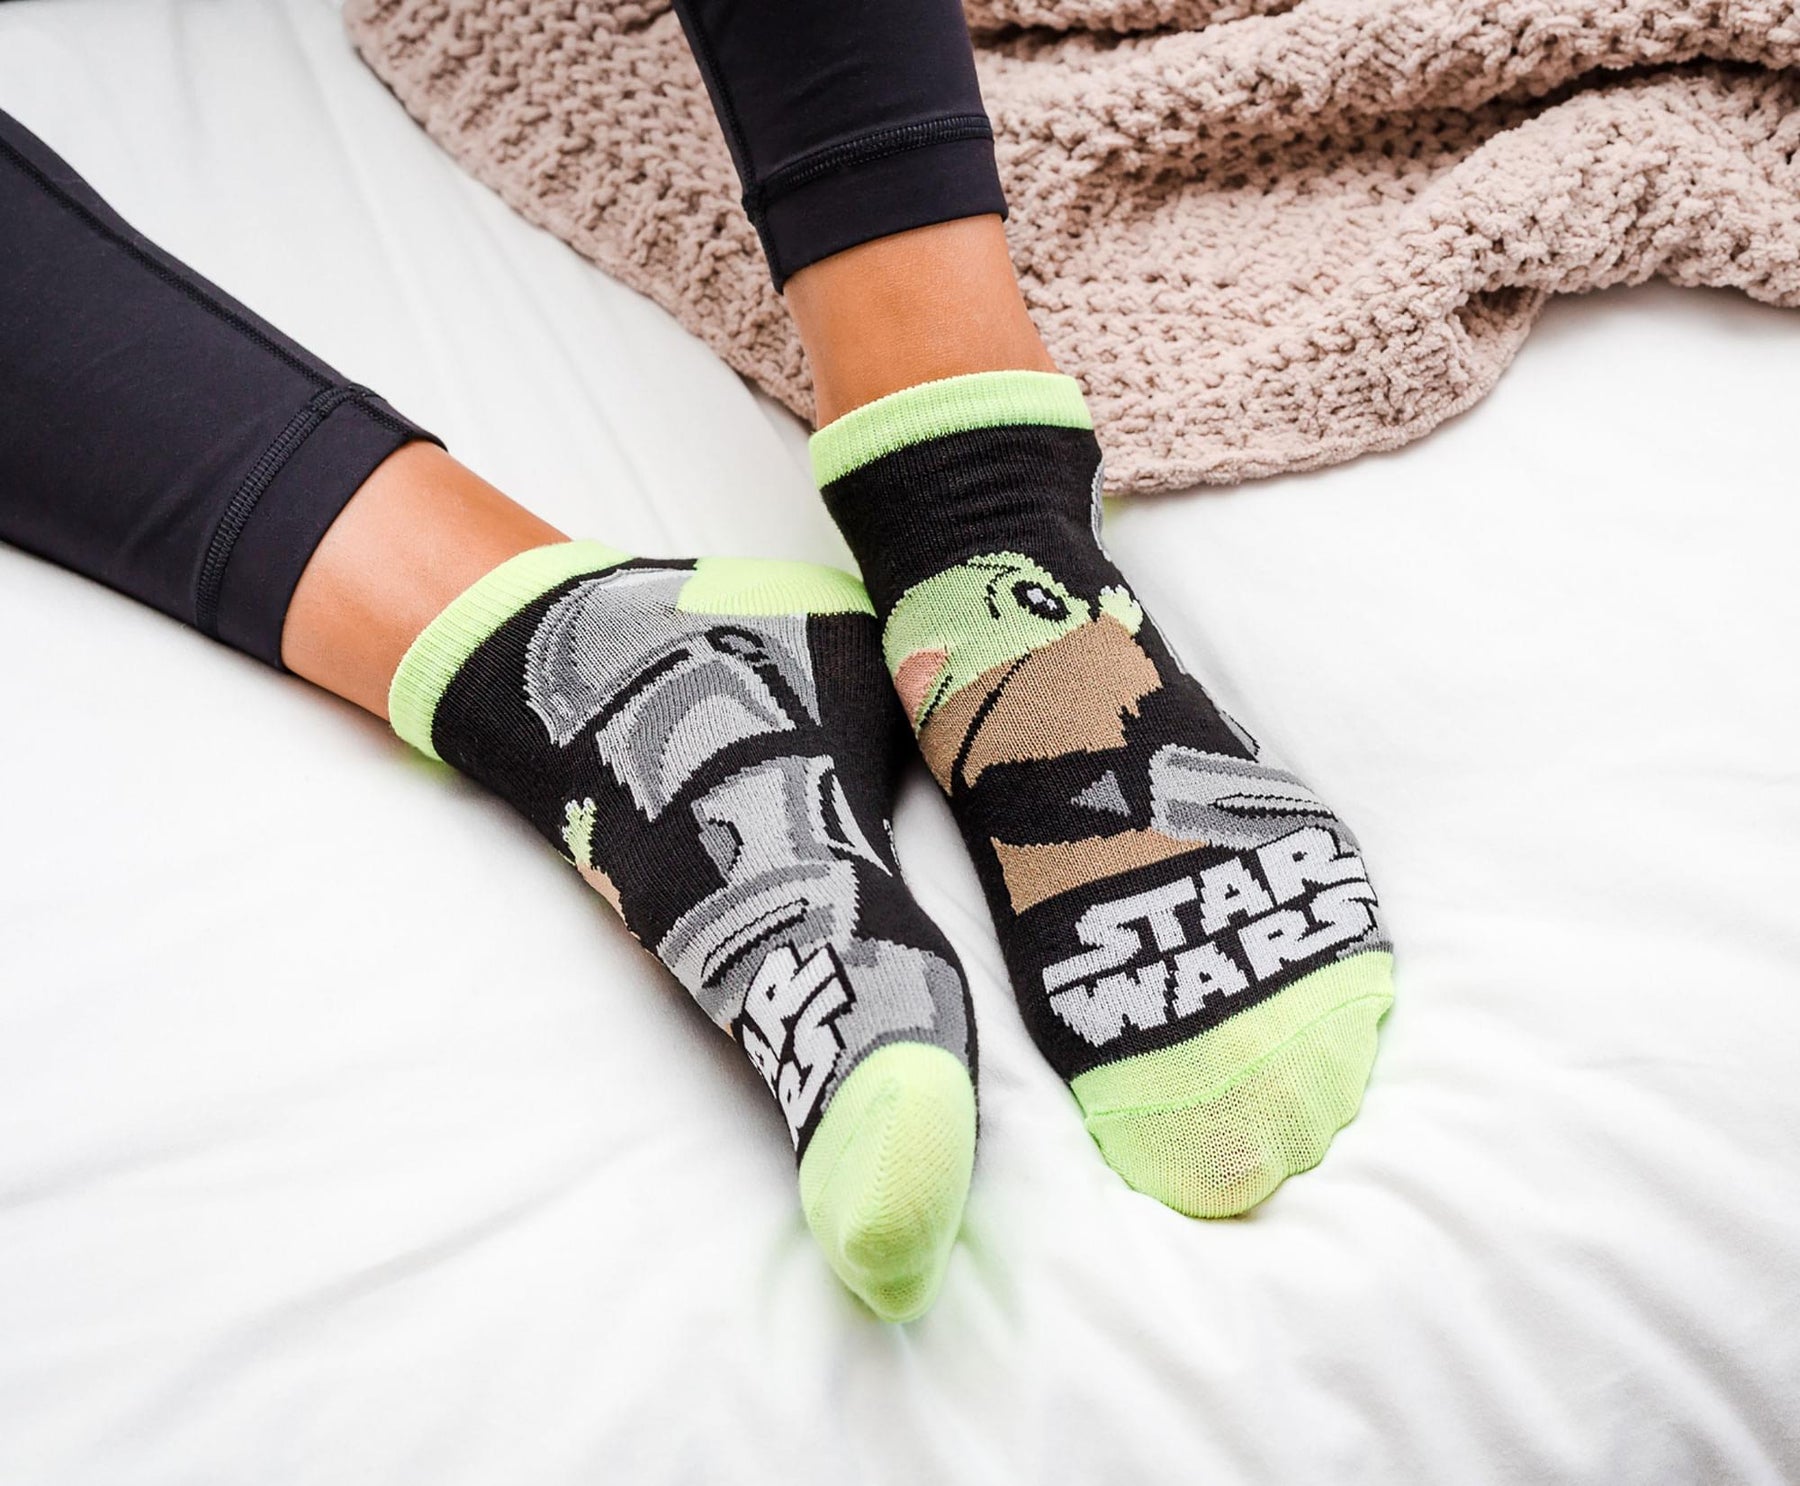 Star Wars: The Mandalorian Unisex Low-Cut Socks | Set B | 5 Pairs | Size 4-10